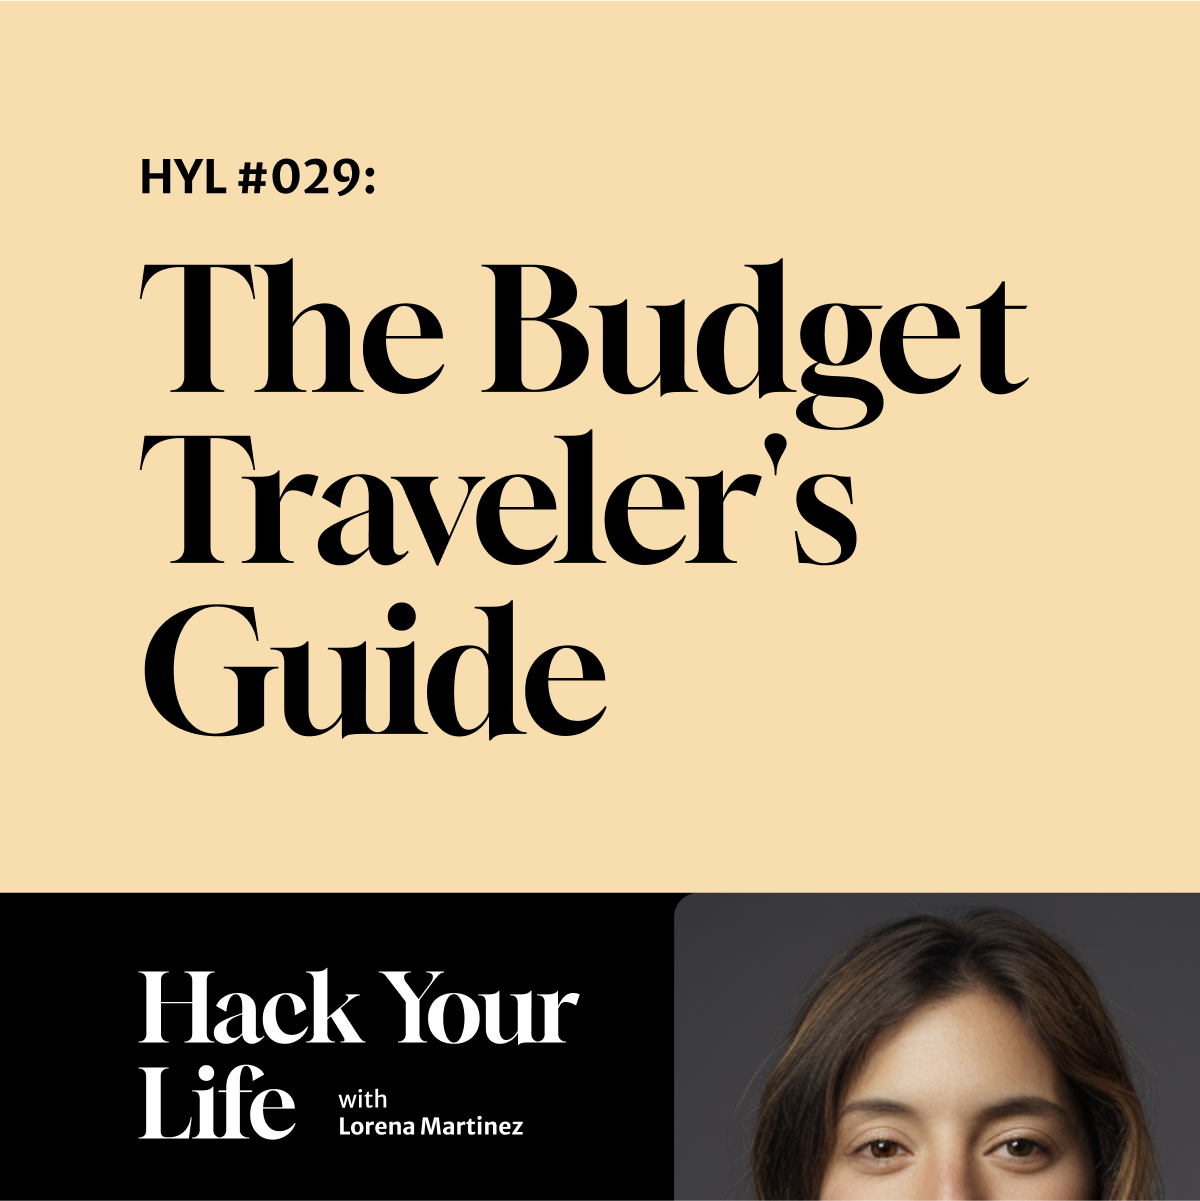 HYL #029: The Budget Traveler’s Guide